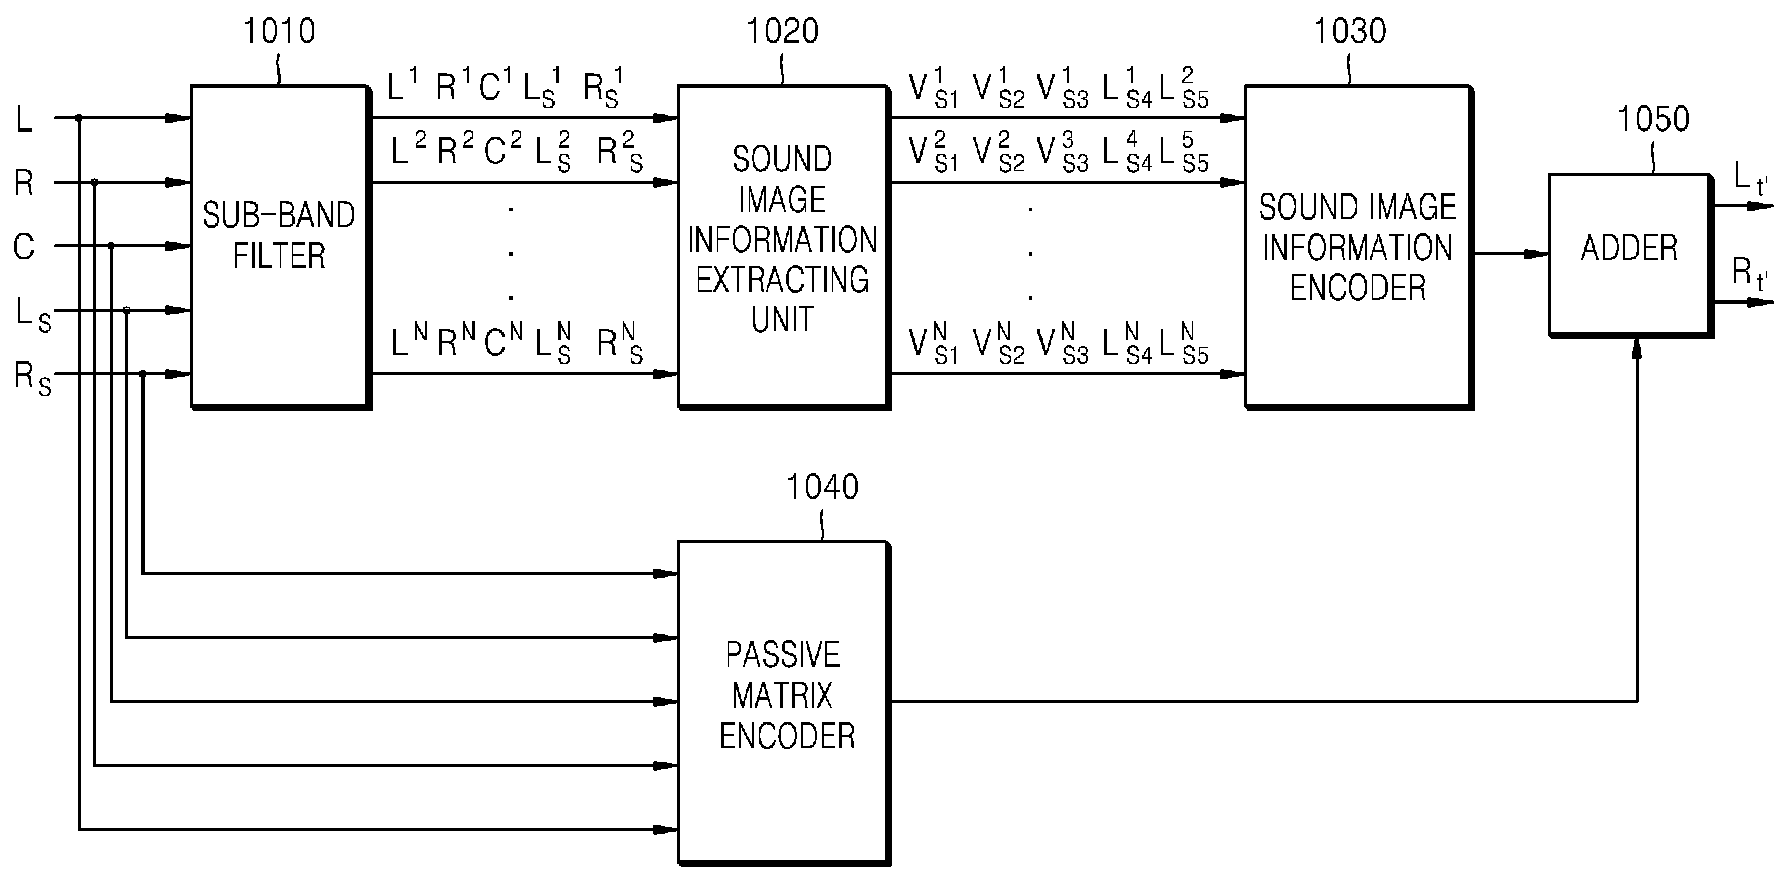 Method and apparatus of audio matrix encoding/decoding